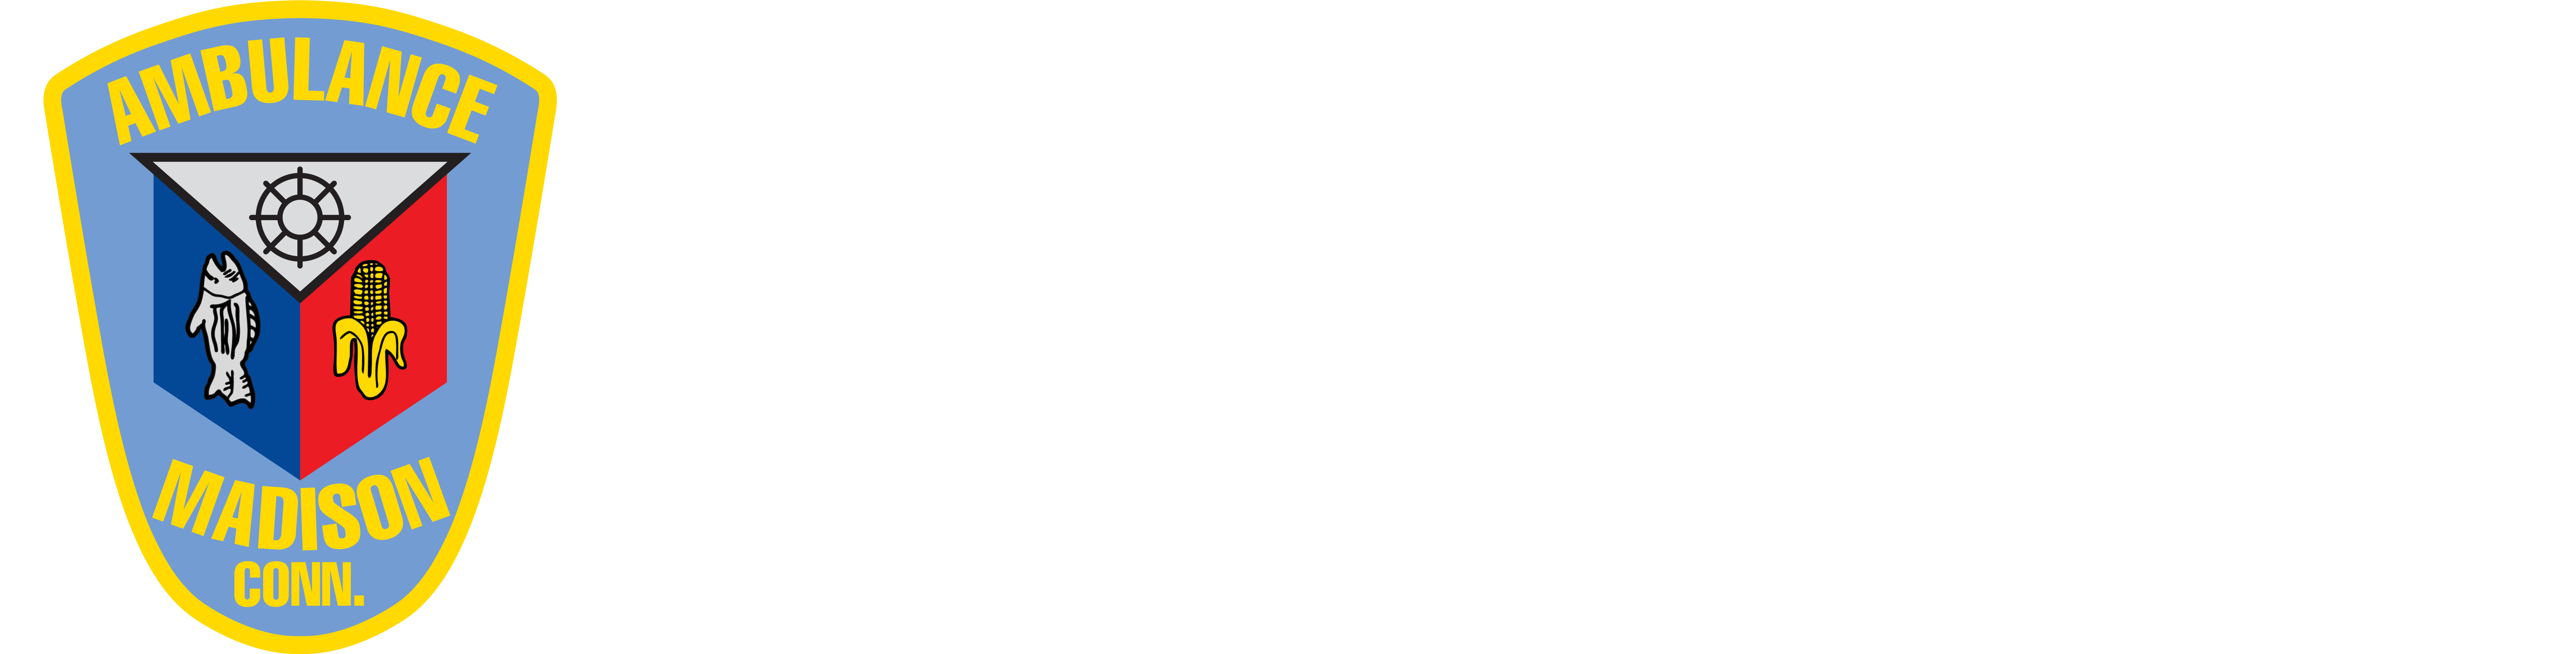 Madison Emergency Medical Services – 